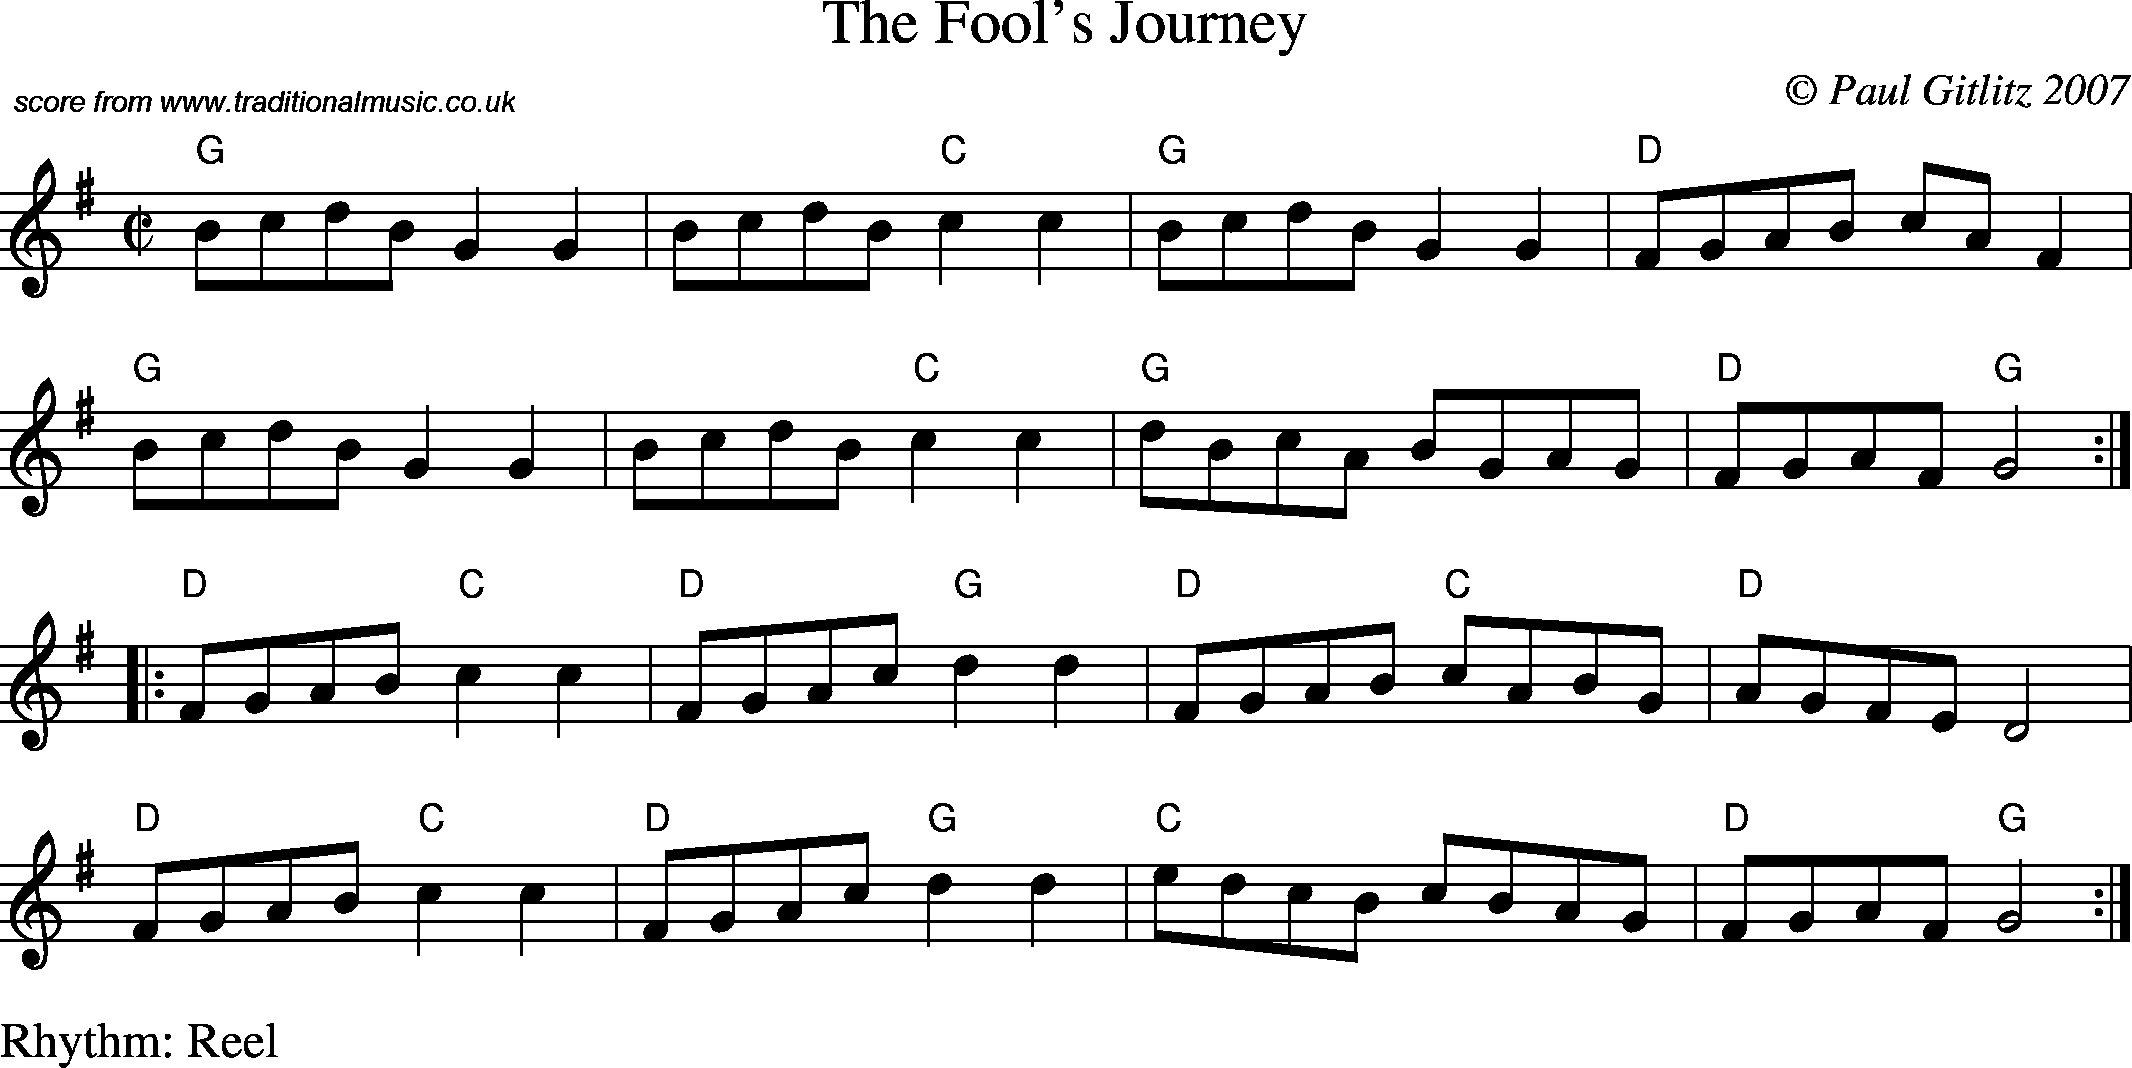 Sheet Music Score for Reel - Fool's Journey, The